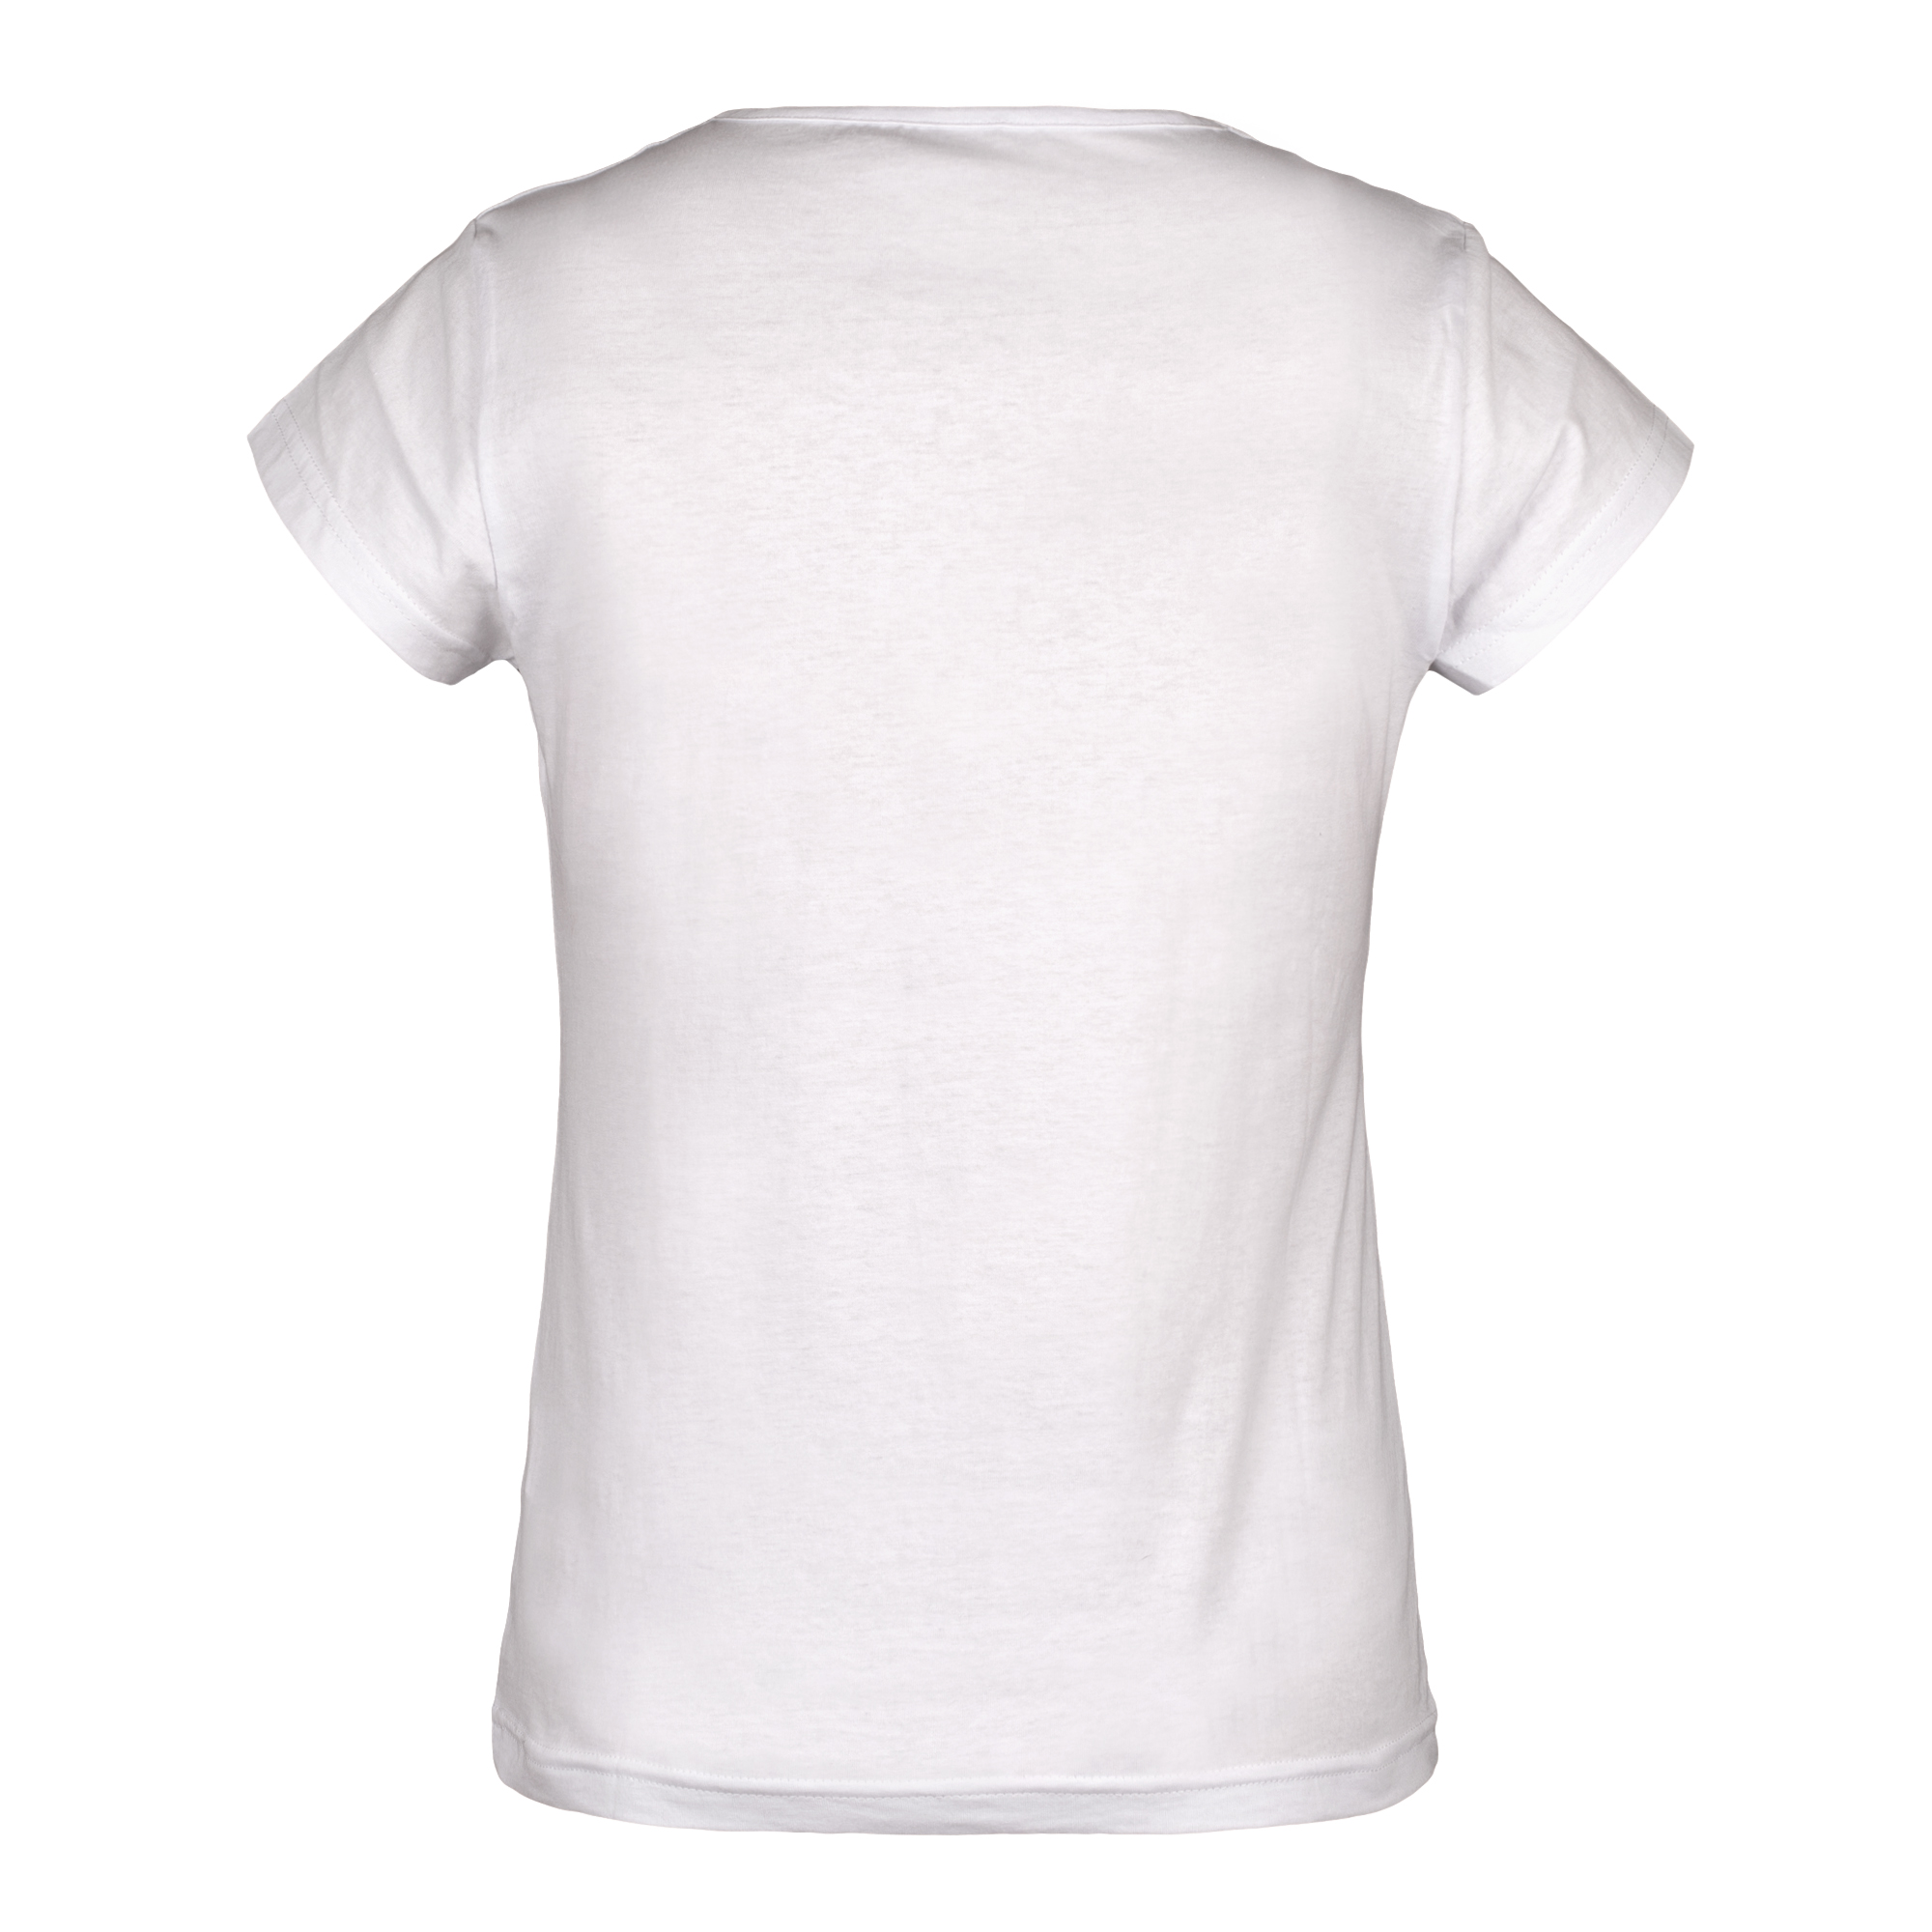 تی شرت زنانه ایموجی کد 002-508